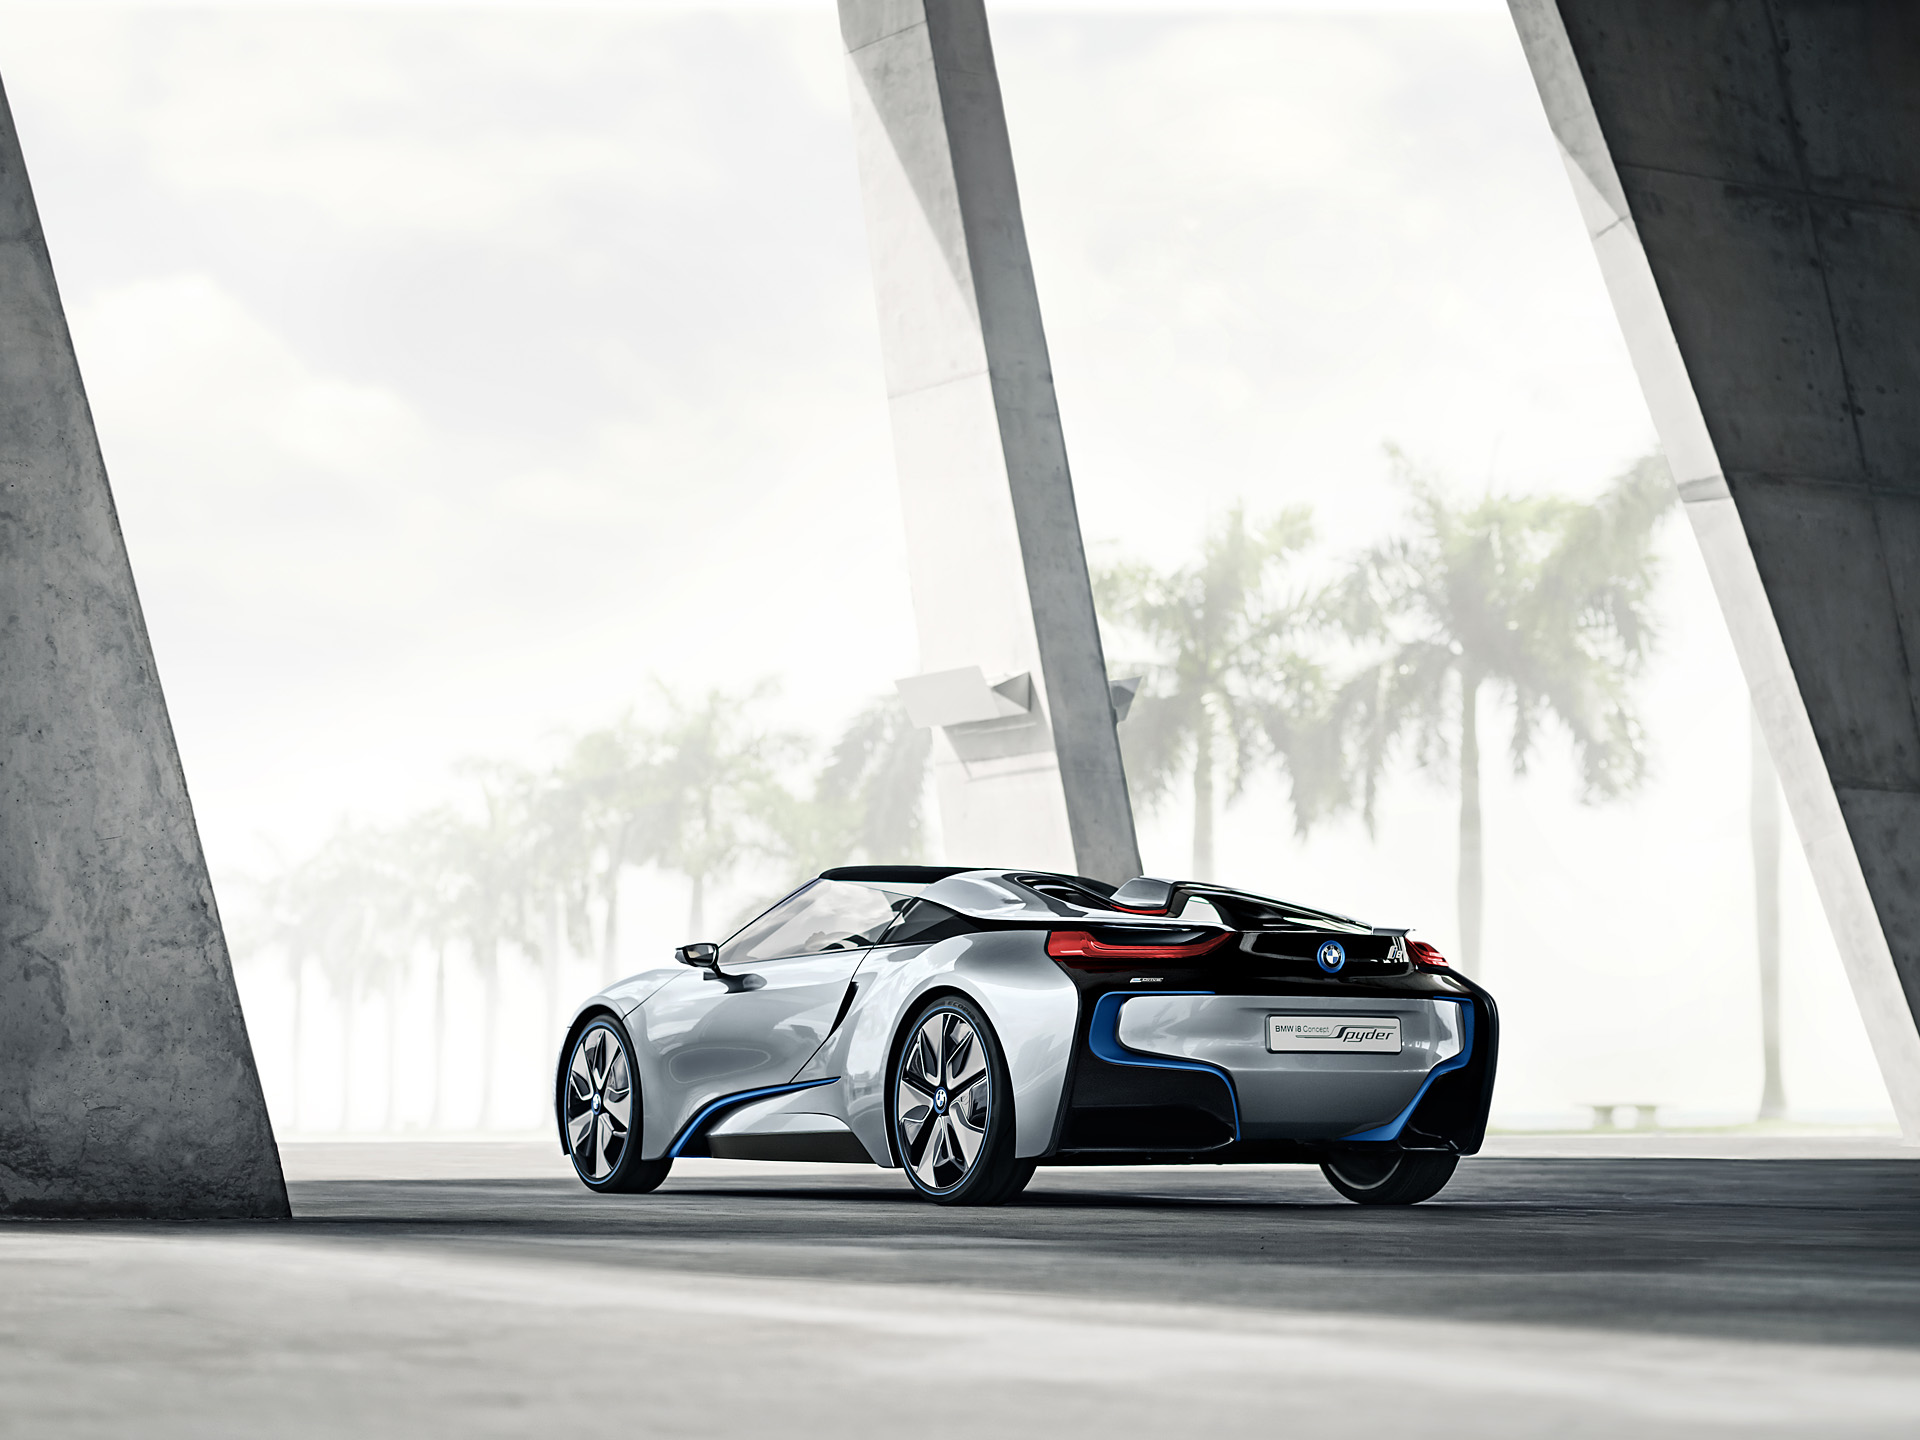  2013 BMW i8 Spyder Concept Wallpaper.